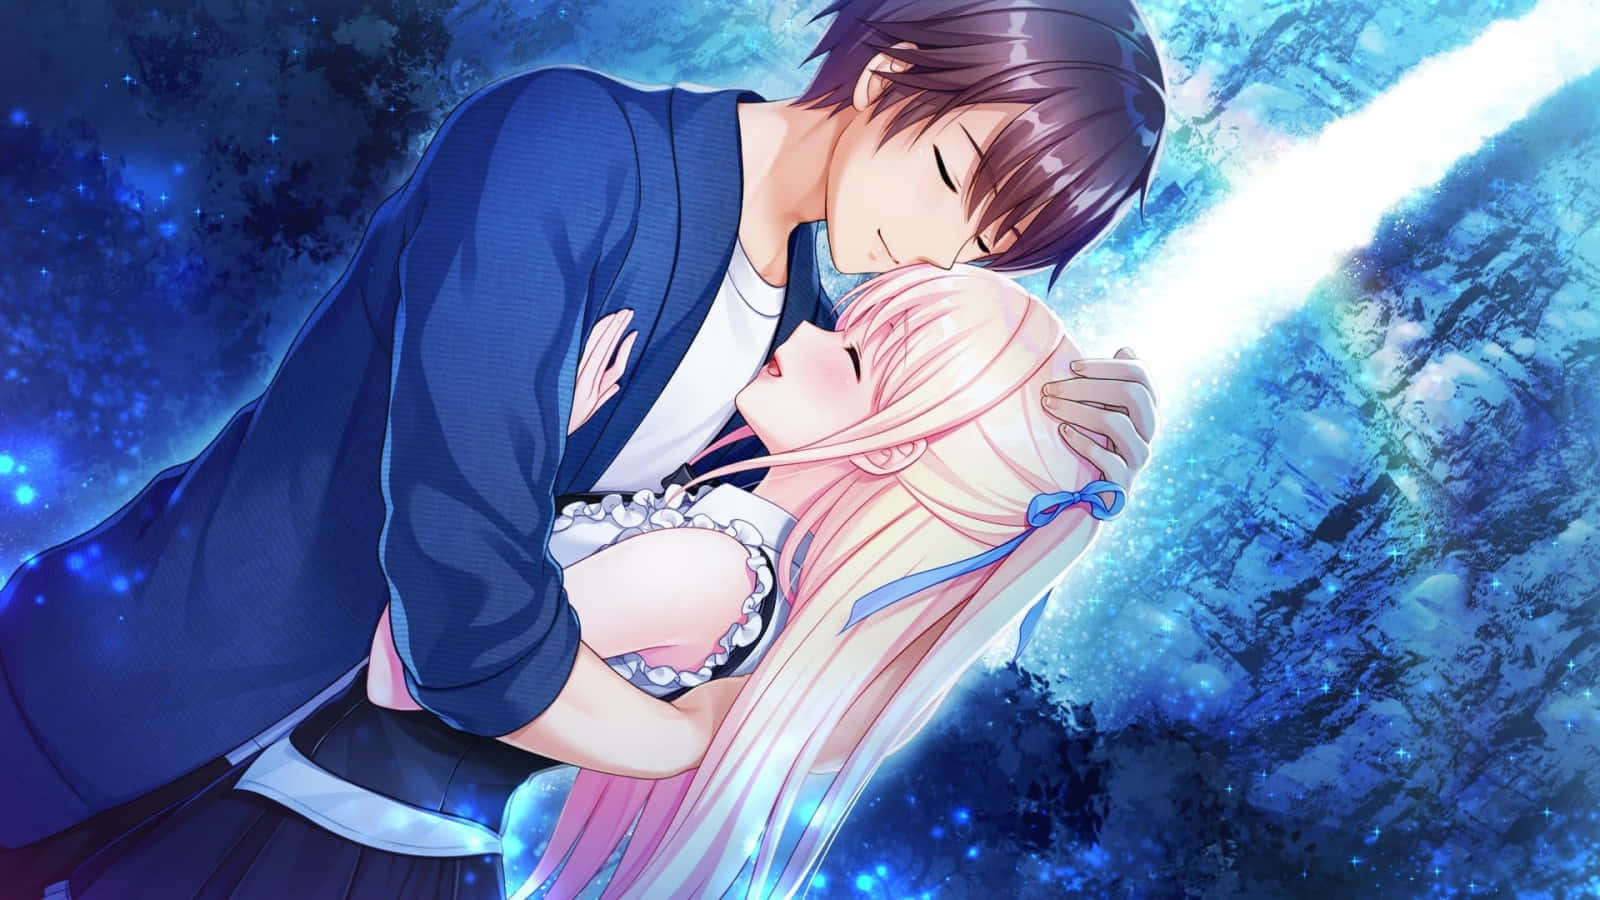 Anime Couple Embrace Under Starry Sky Wallpaper